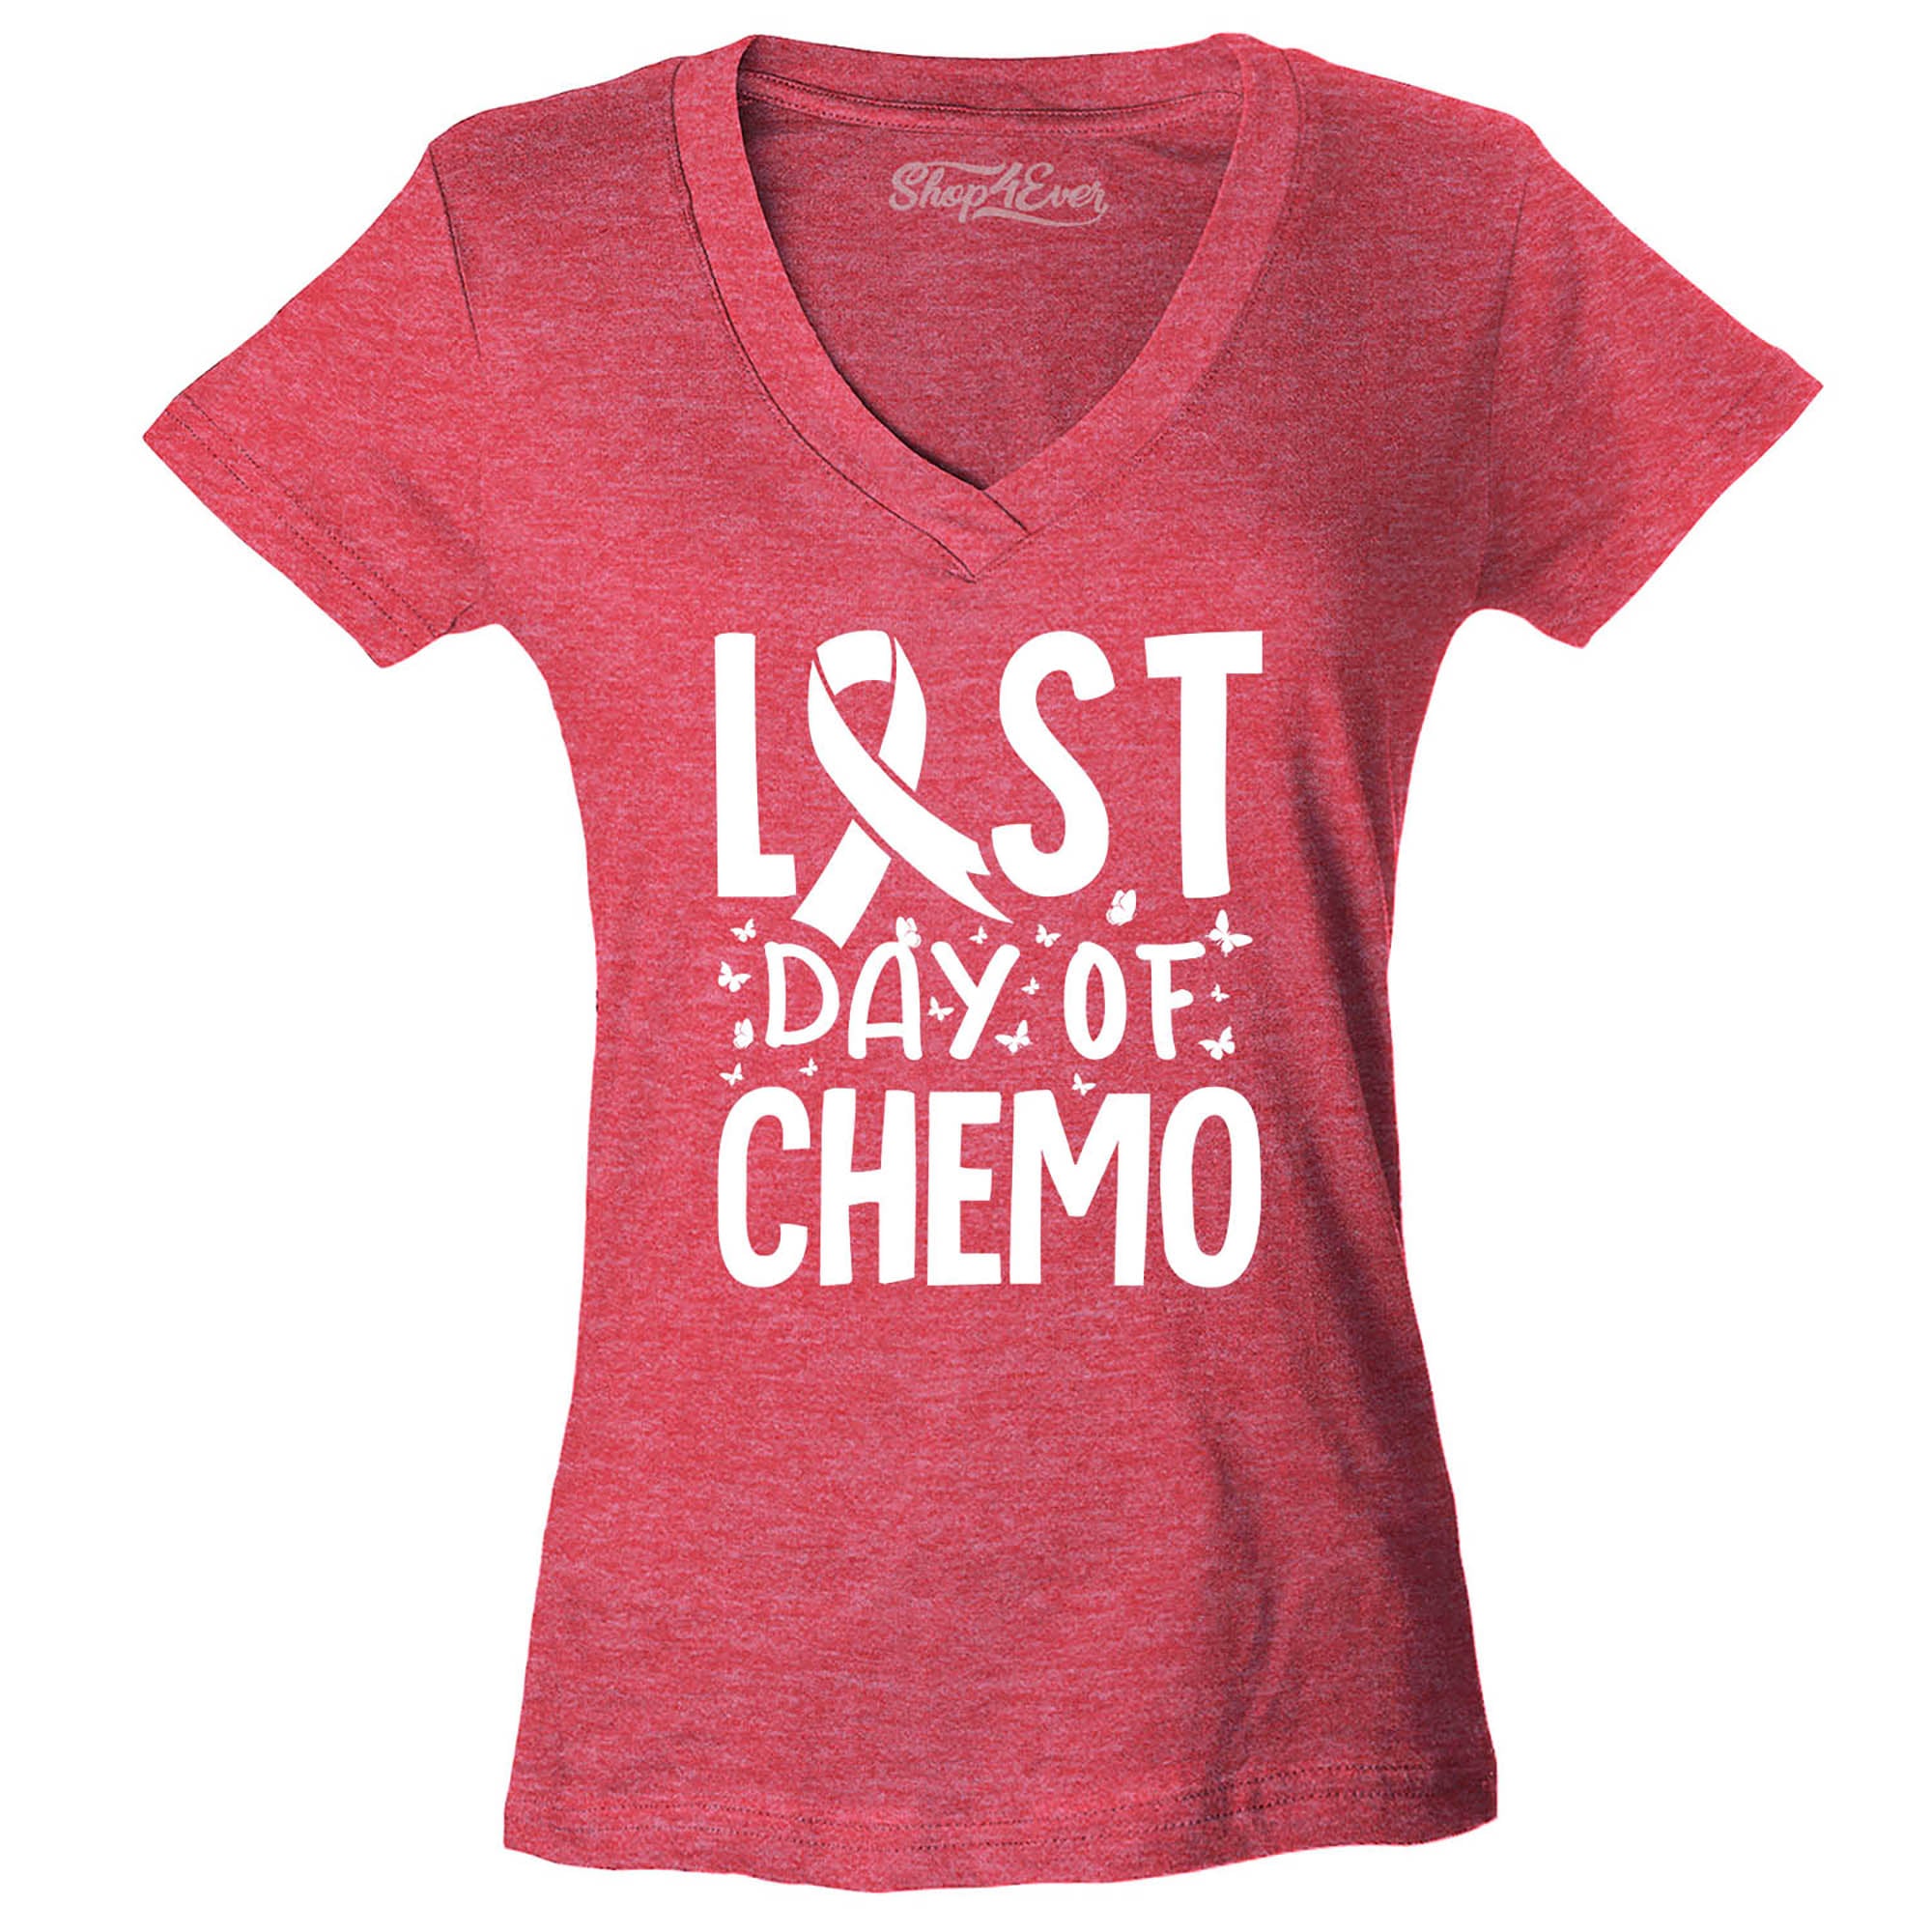 Last Day of Chemo Celebrate Cancer Survivor Women's V-Neck T-Shirt Slim Fit